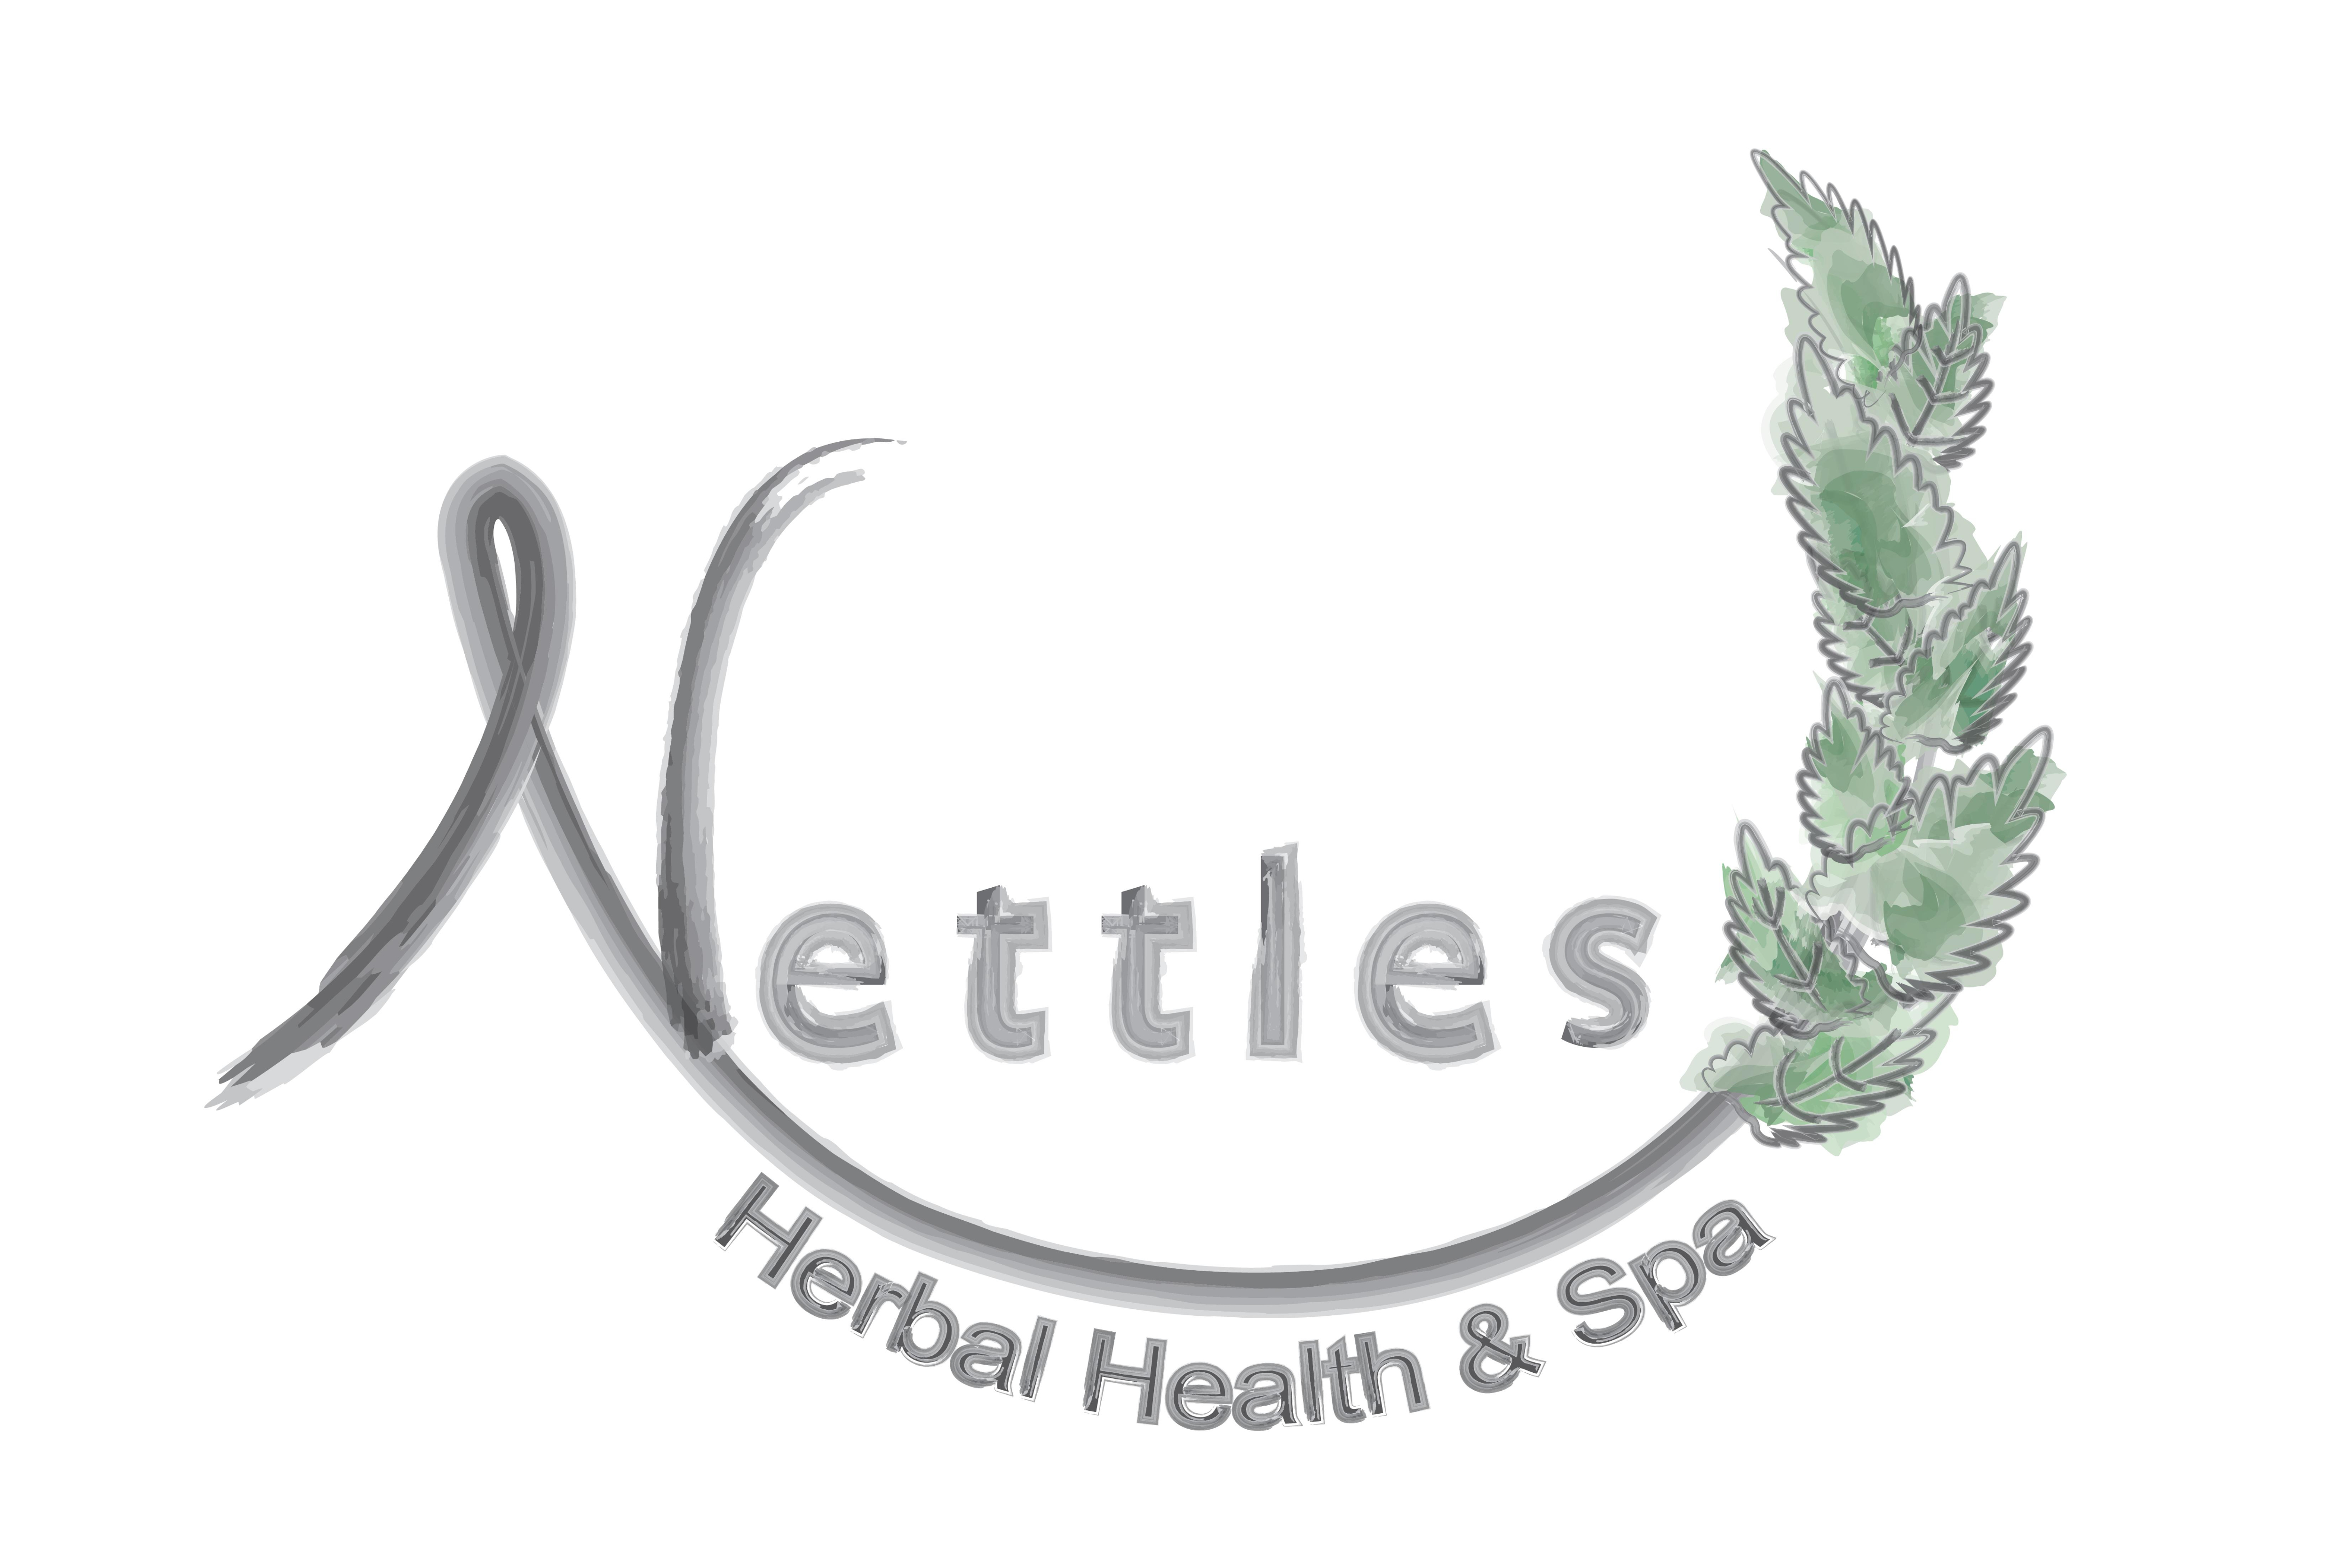 Dental herbal health logo stock vectorIllustration of ecology - 79674062